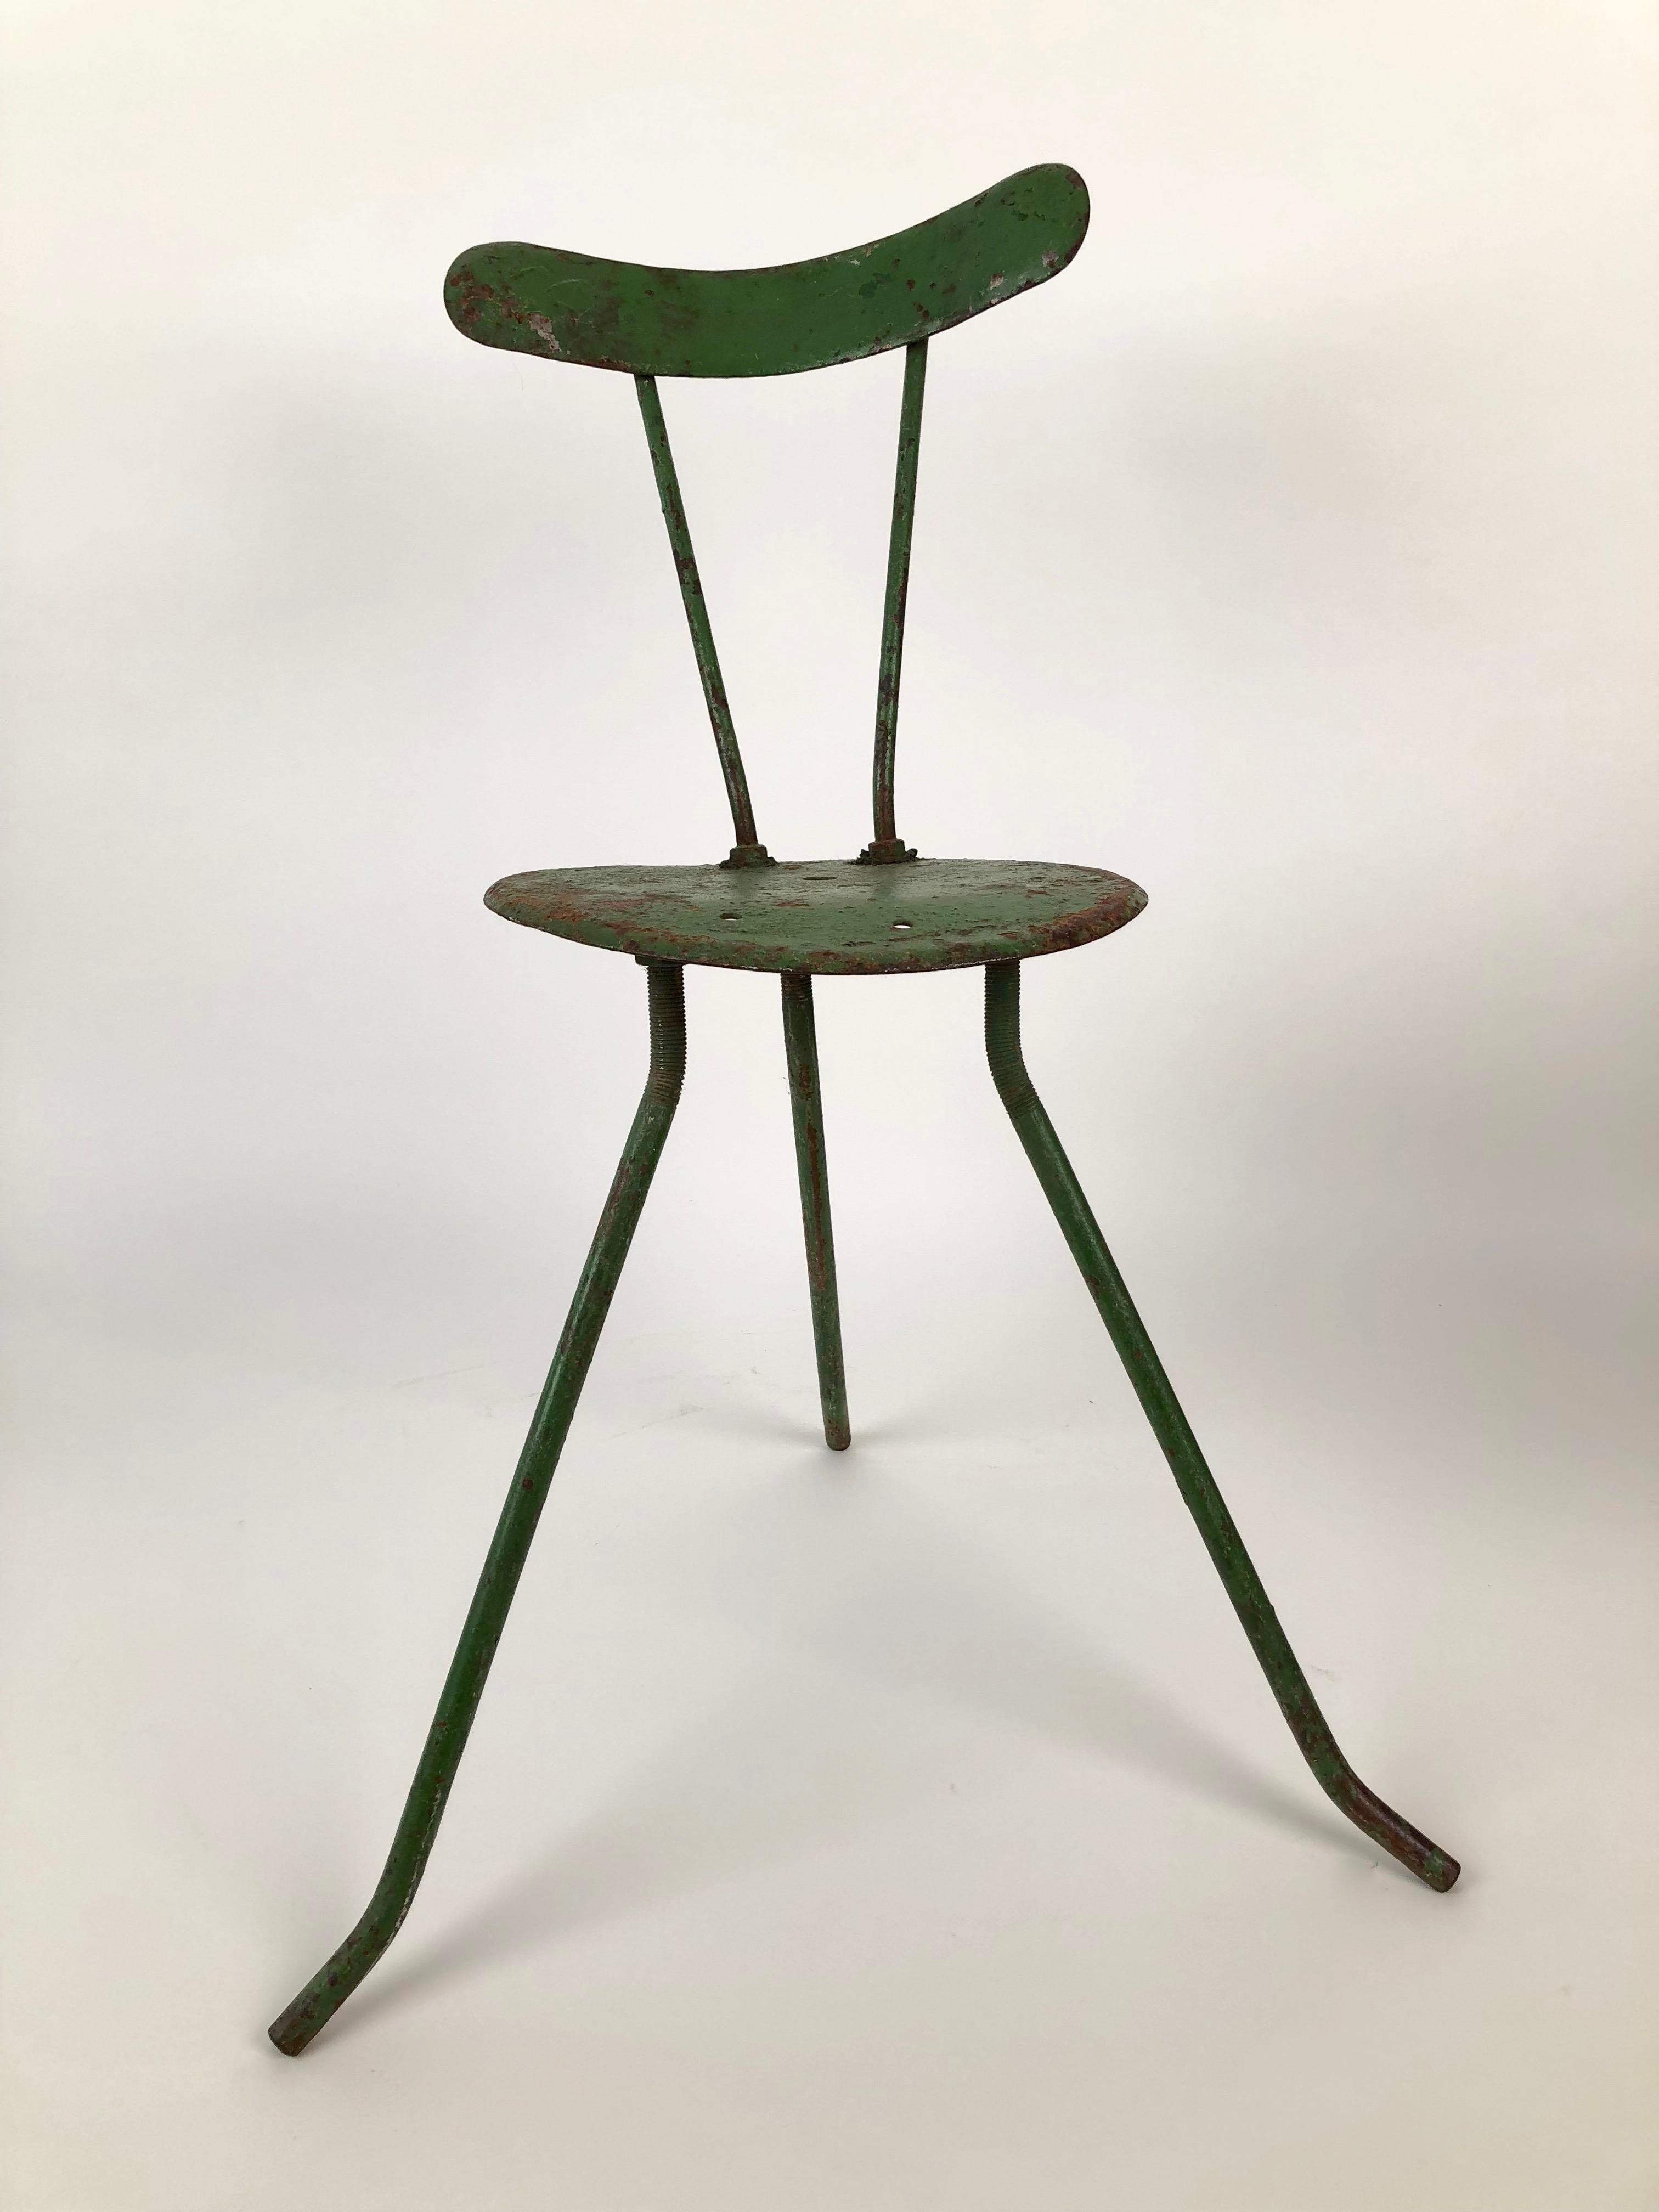 Pair of Handmade Metal Chairs, 1950s, from the Balaton Lake Region, Hungary For Sale 1